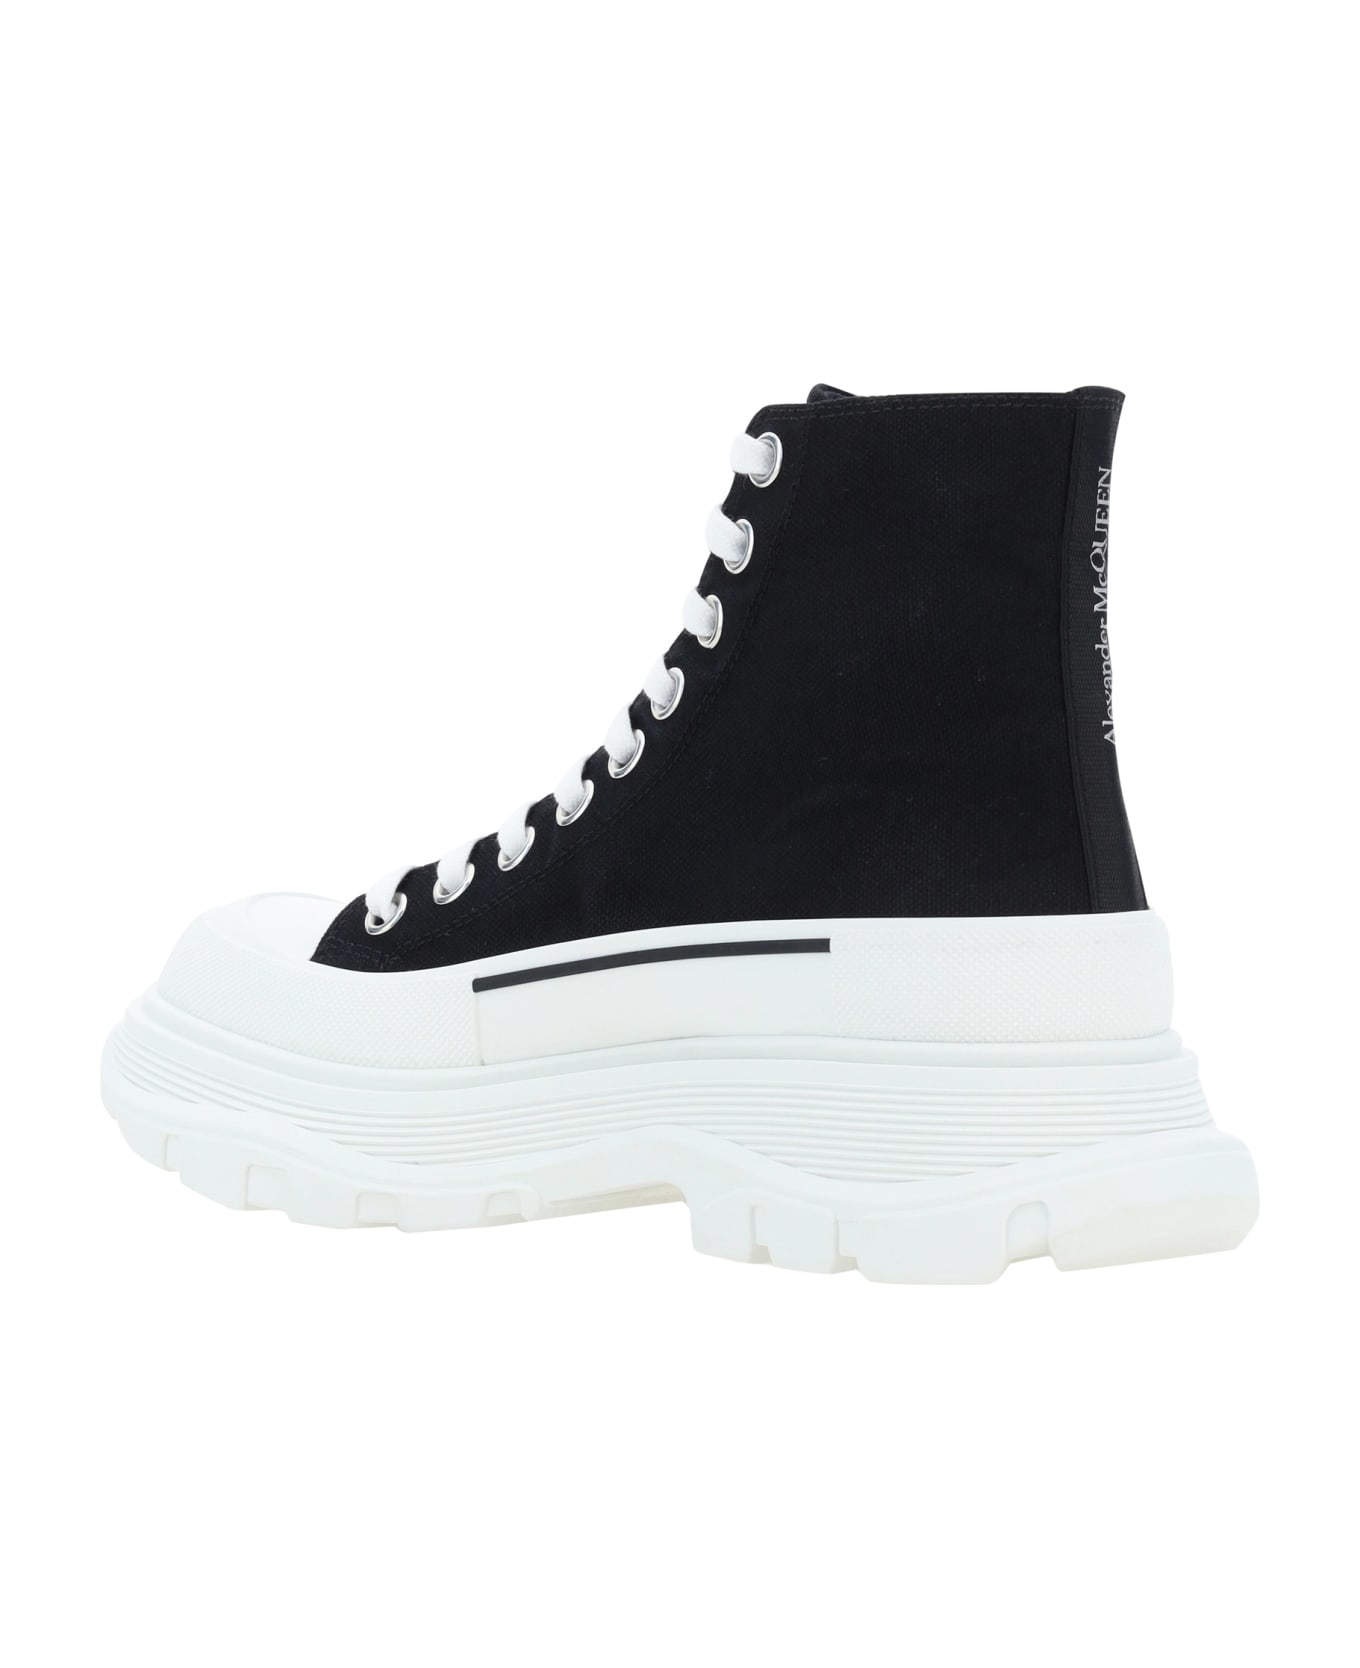 Alexander McQueen Tread Slick Ankle Boots - Black/white スニーカー